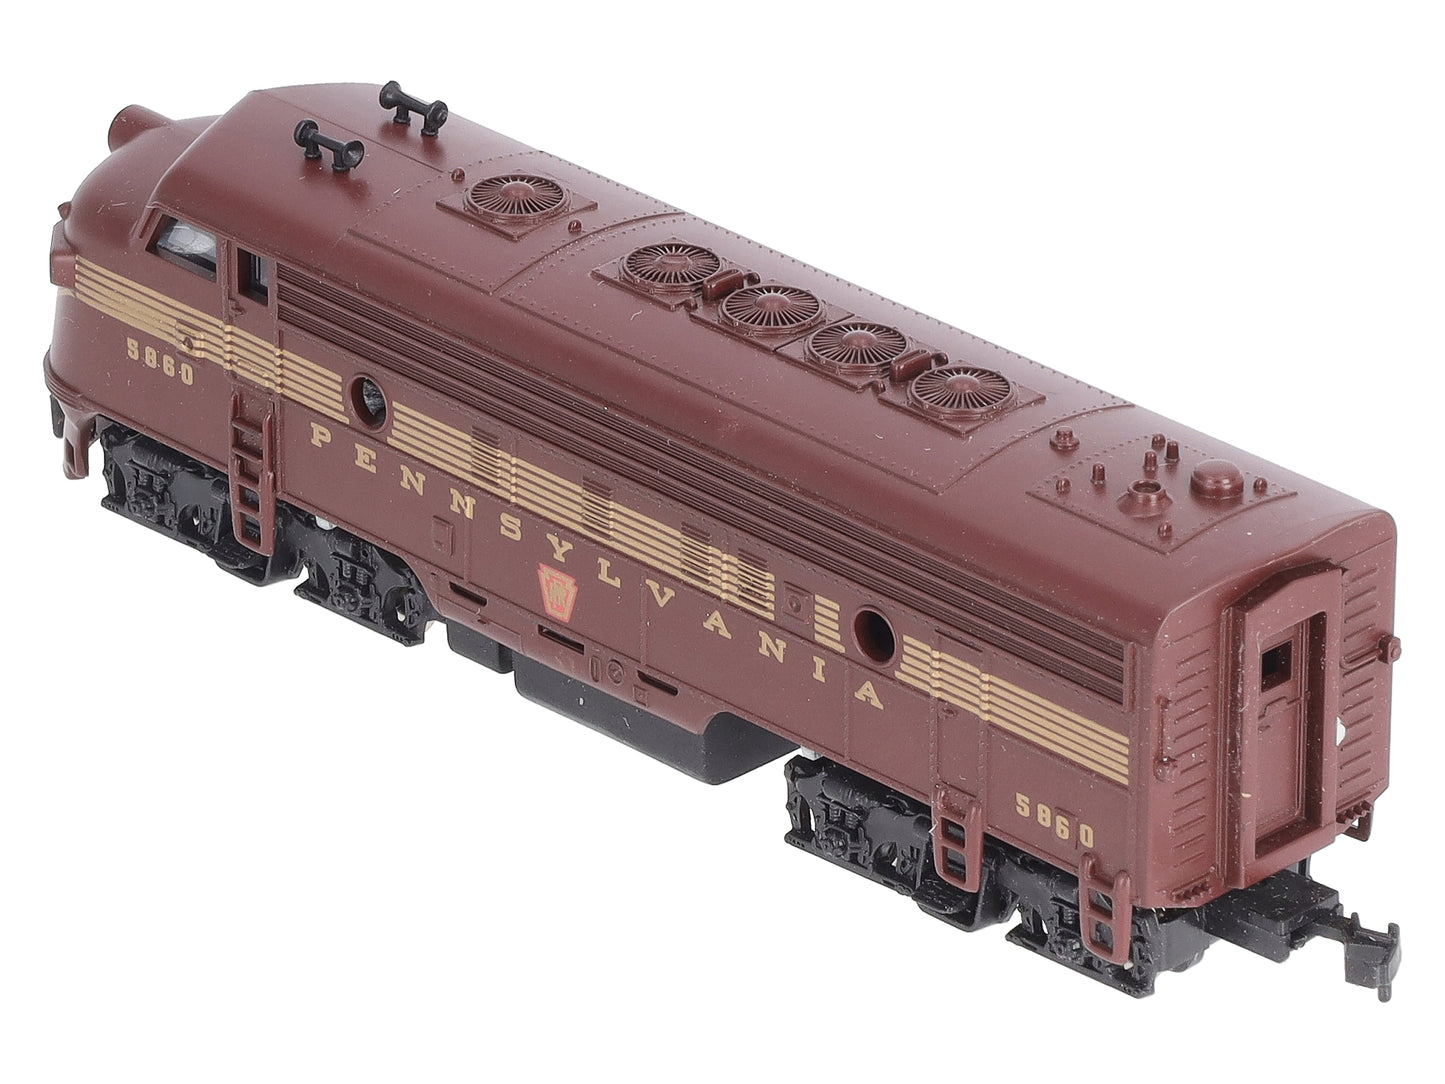 Mantua 413-170 HO Pennsylvania F7-A Diesel Locomotive #5860 EX/Box